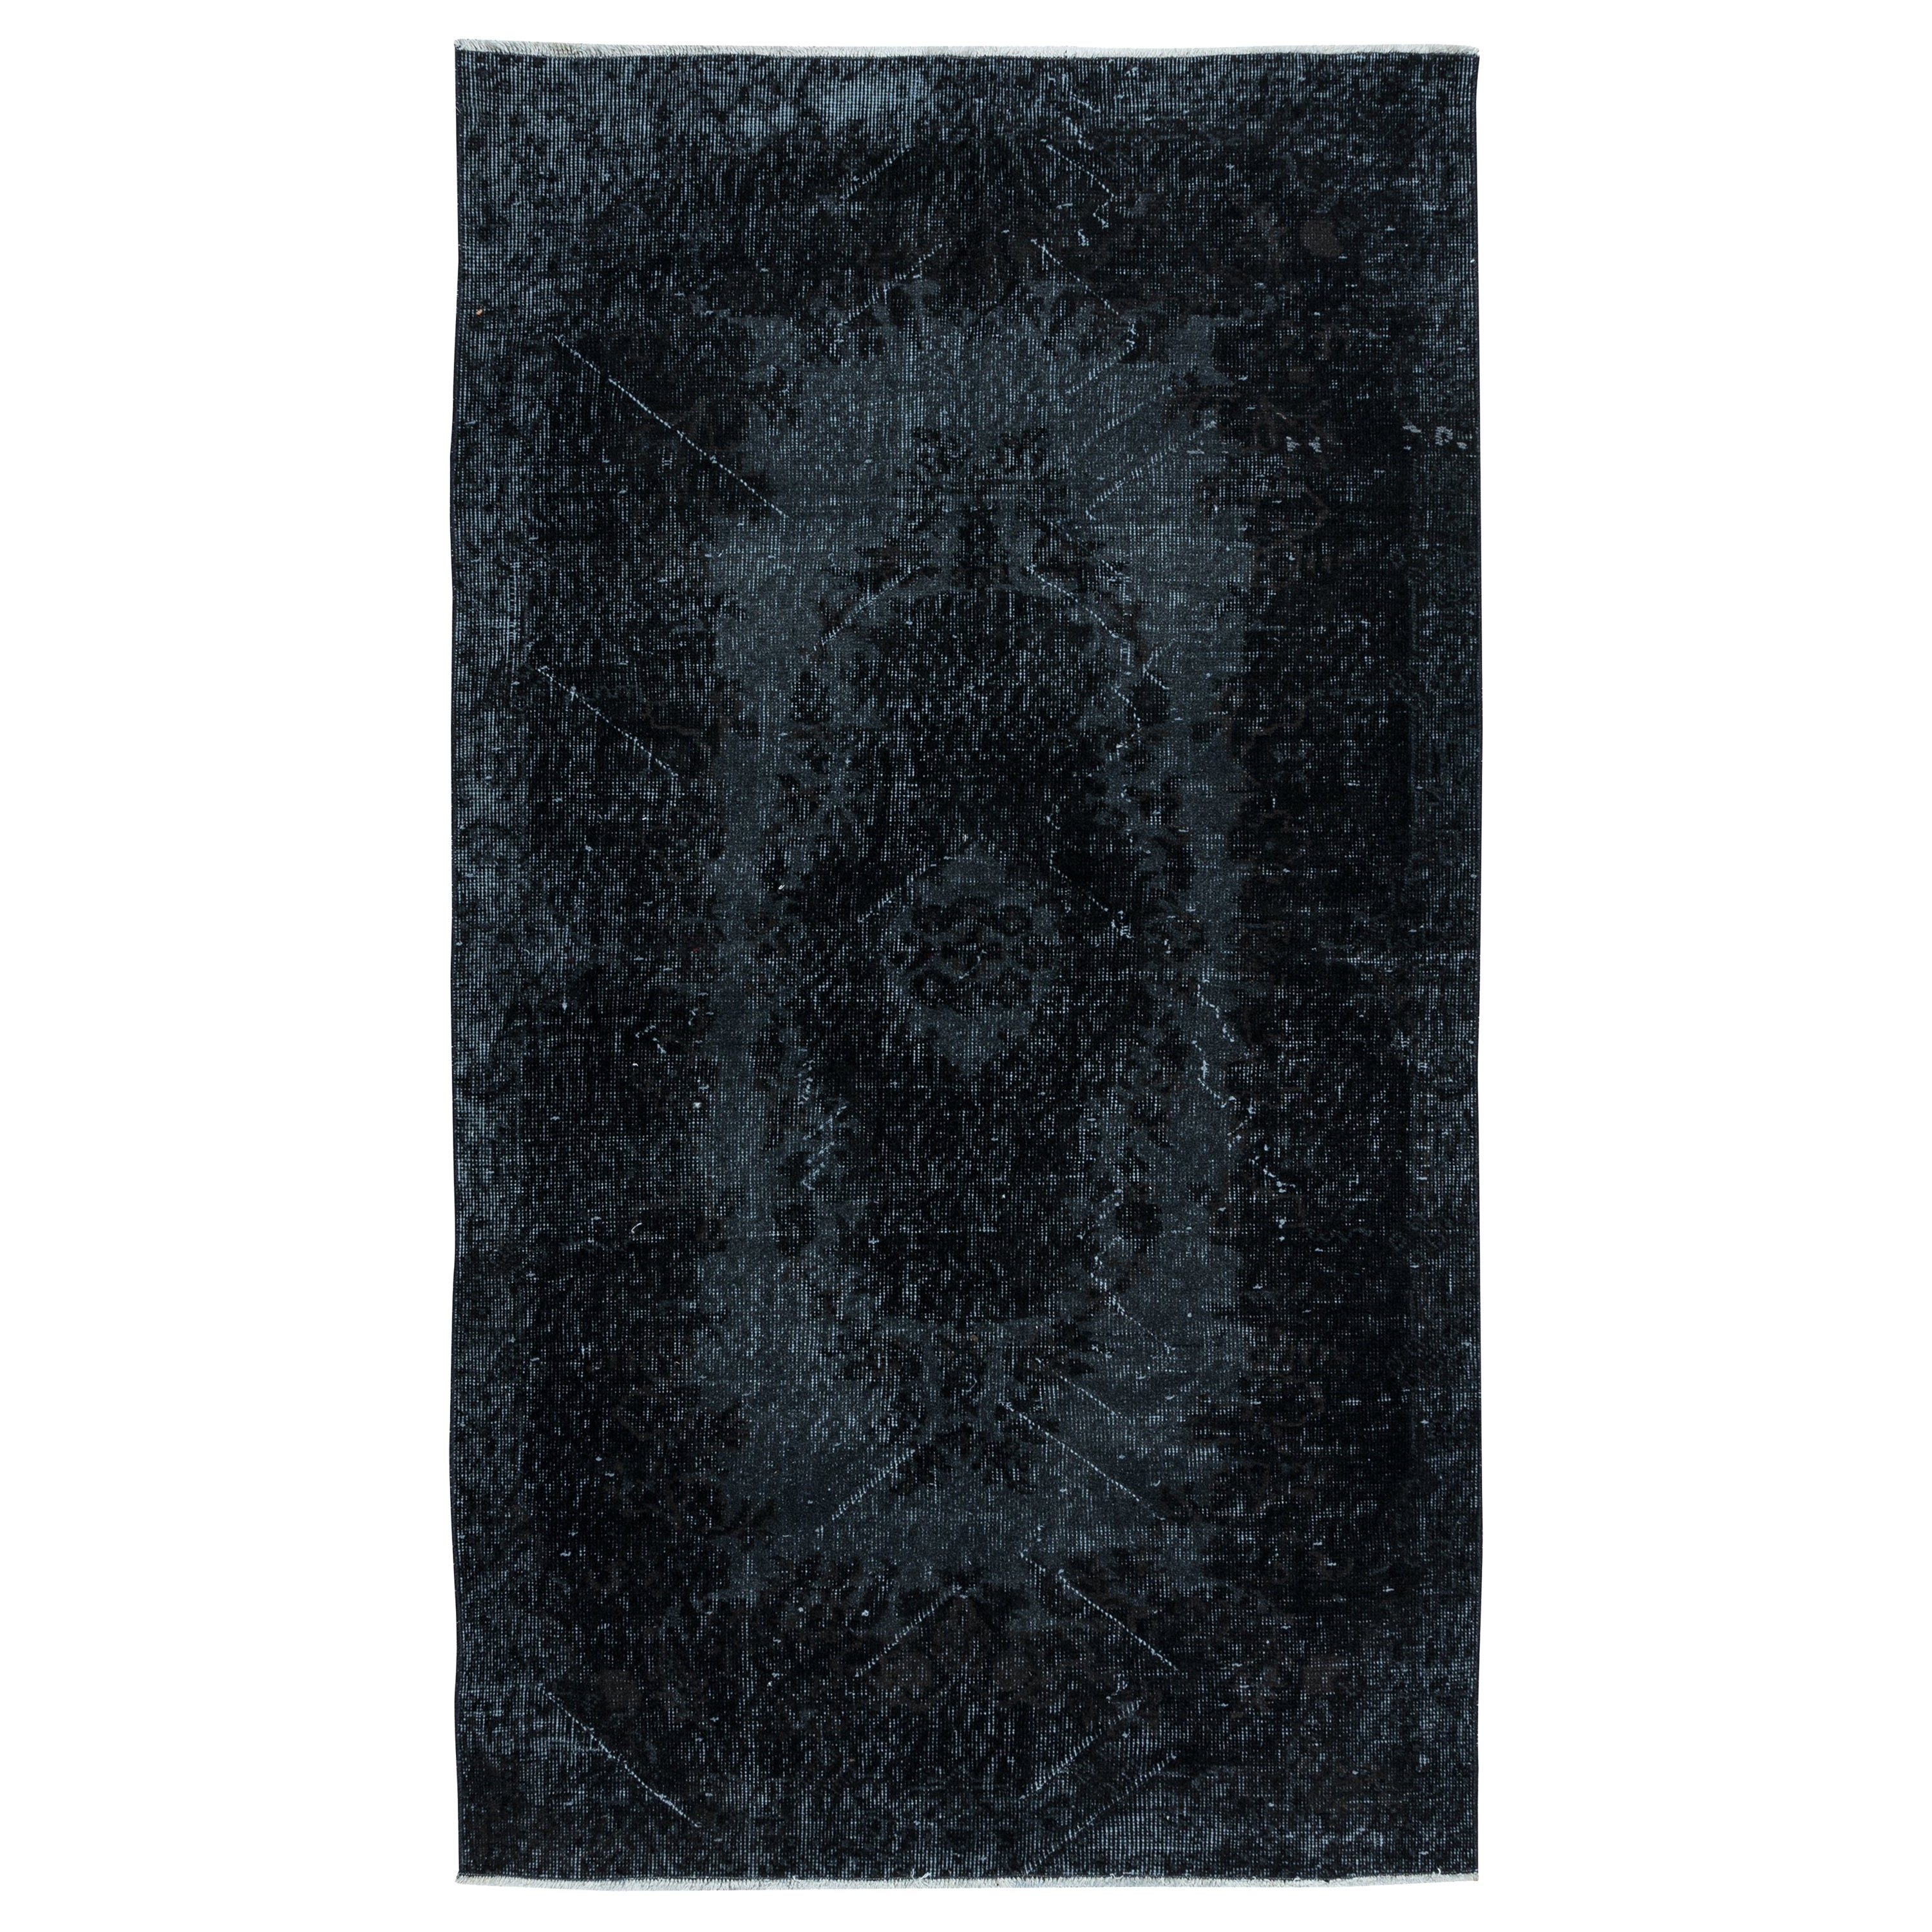 3.8x6.6 Ft Charcoal Gray & Black Living Room Rug, Modern Handmade Turkish Carpet